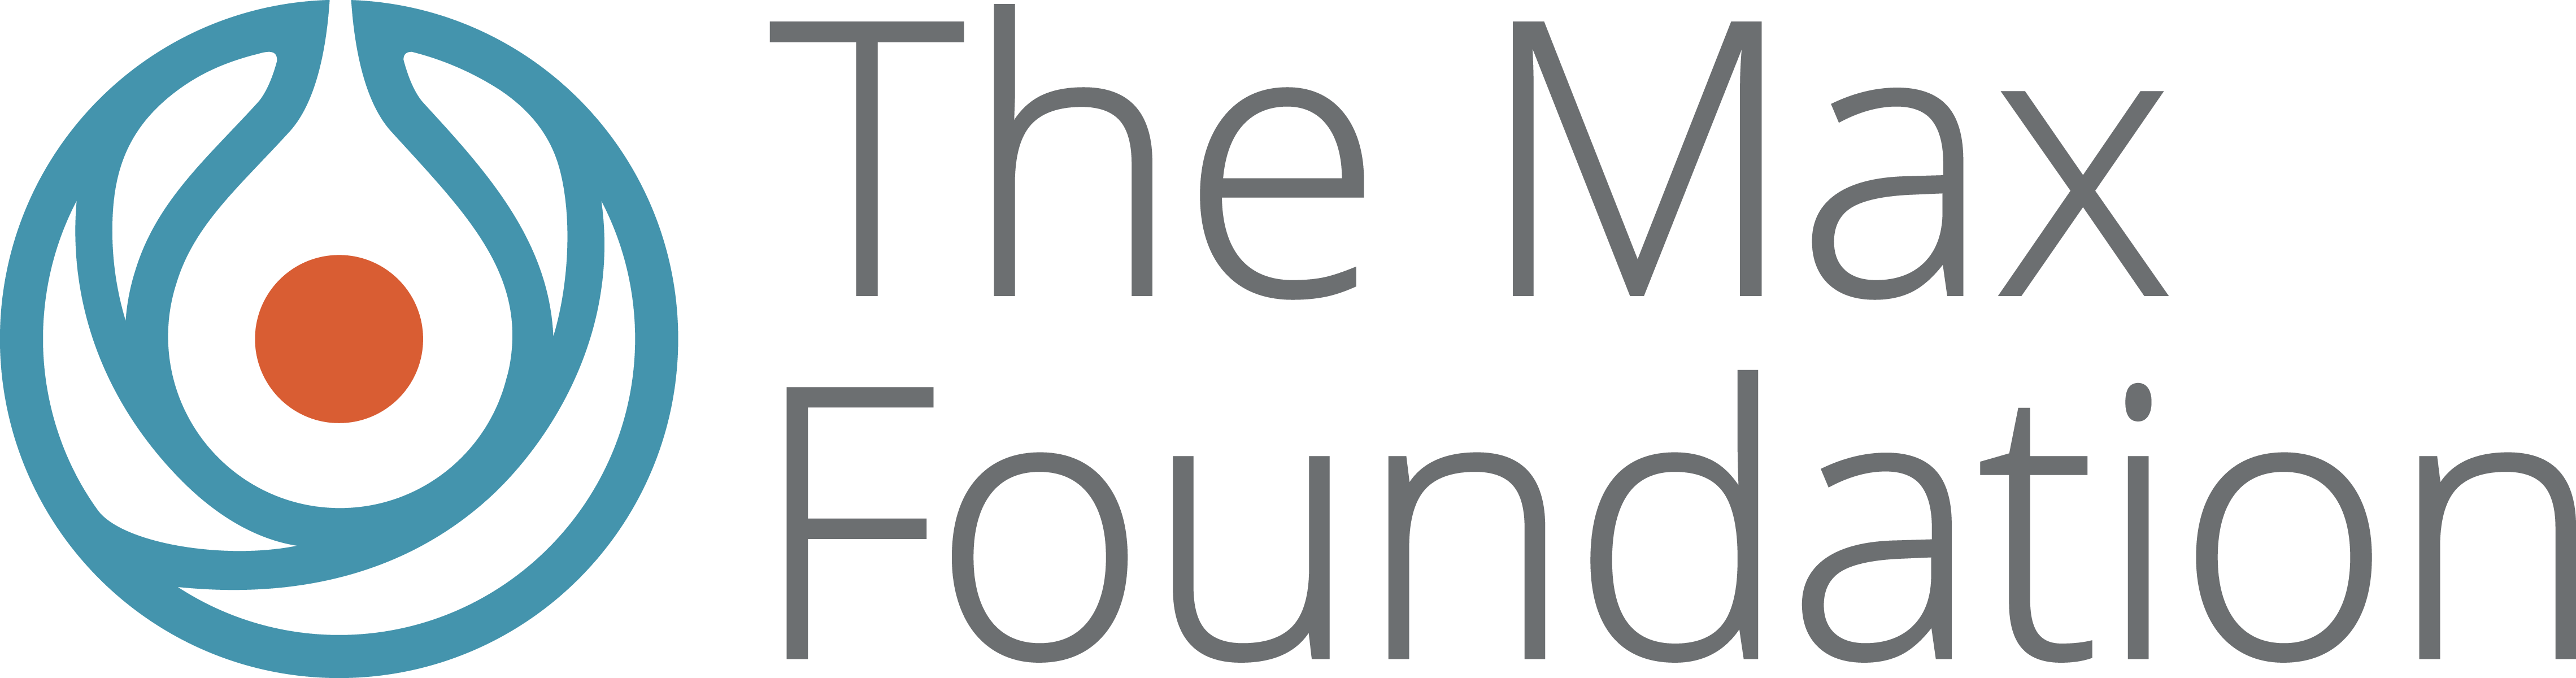 The Max Foundation logo